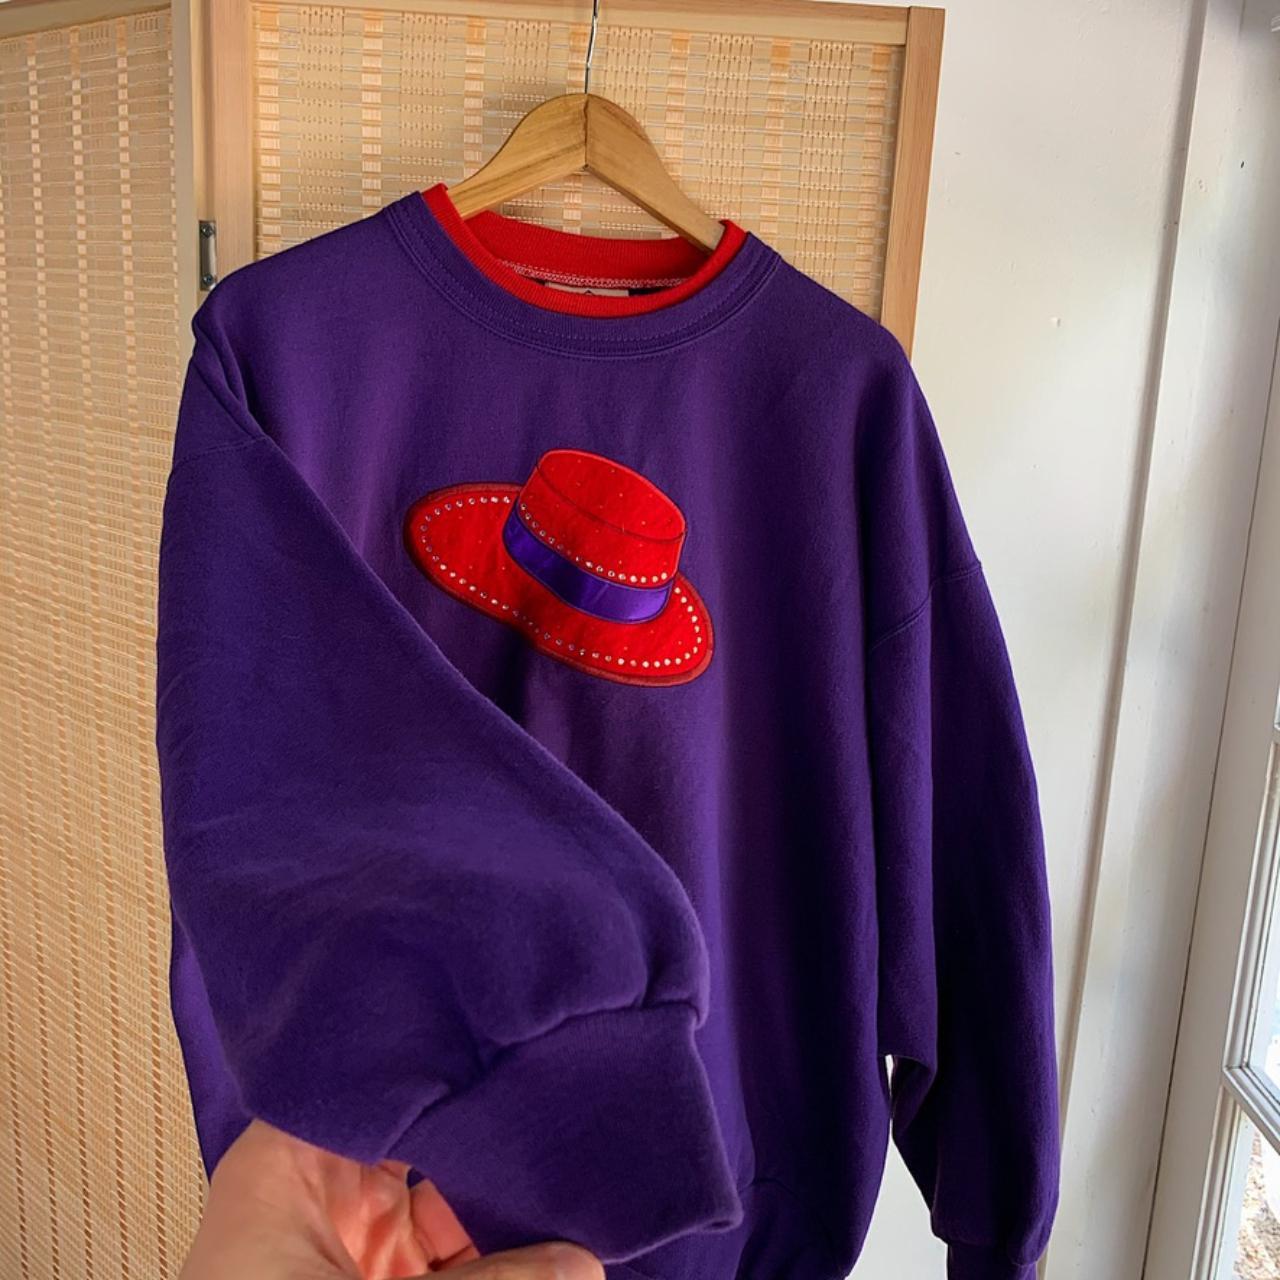 Top Stitch Men's Purple and Red Sweatshirt (3)